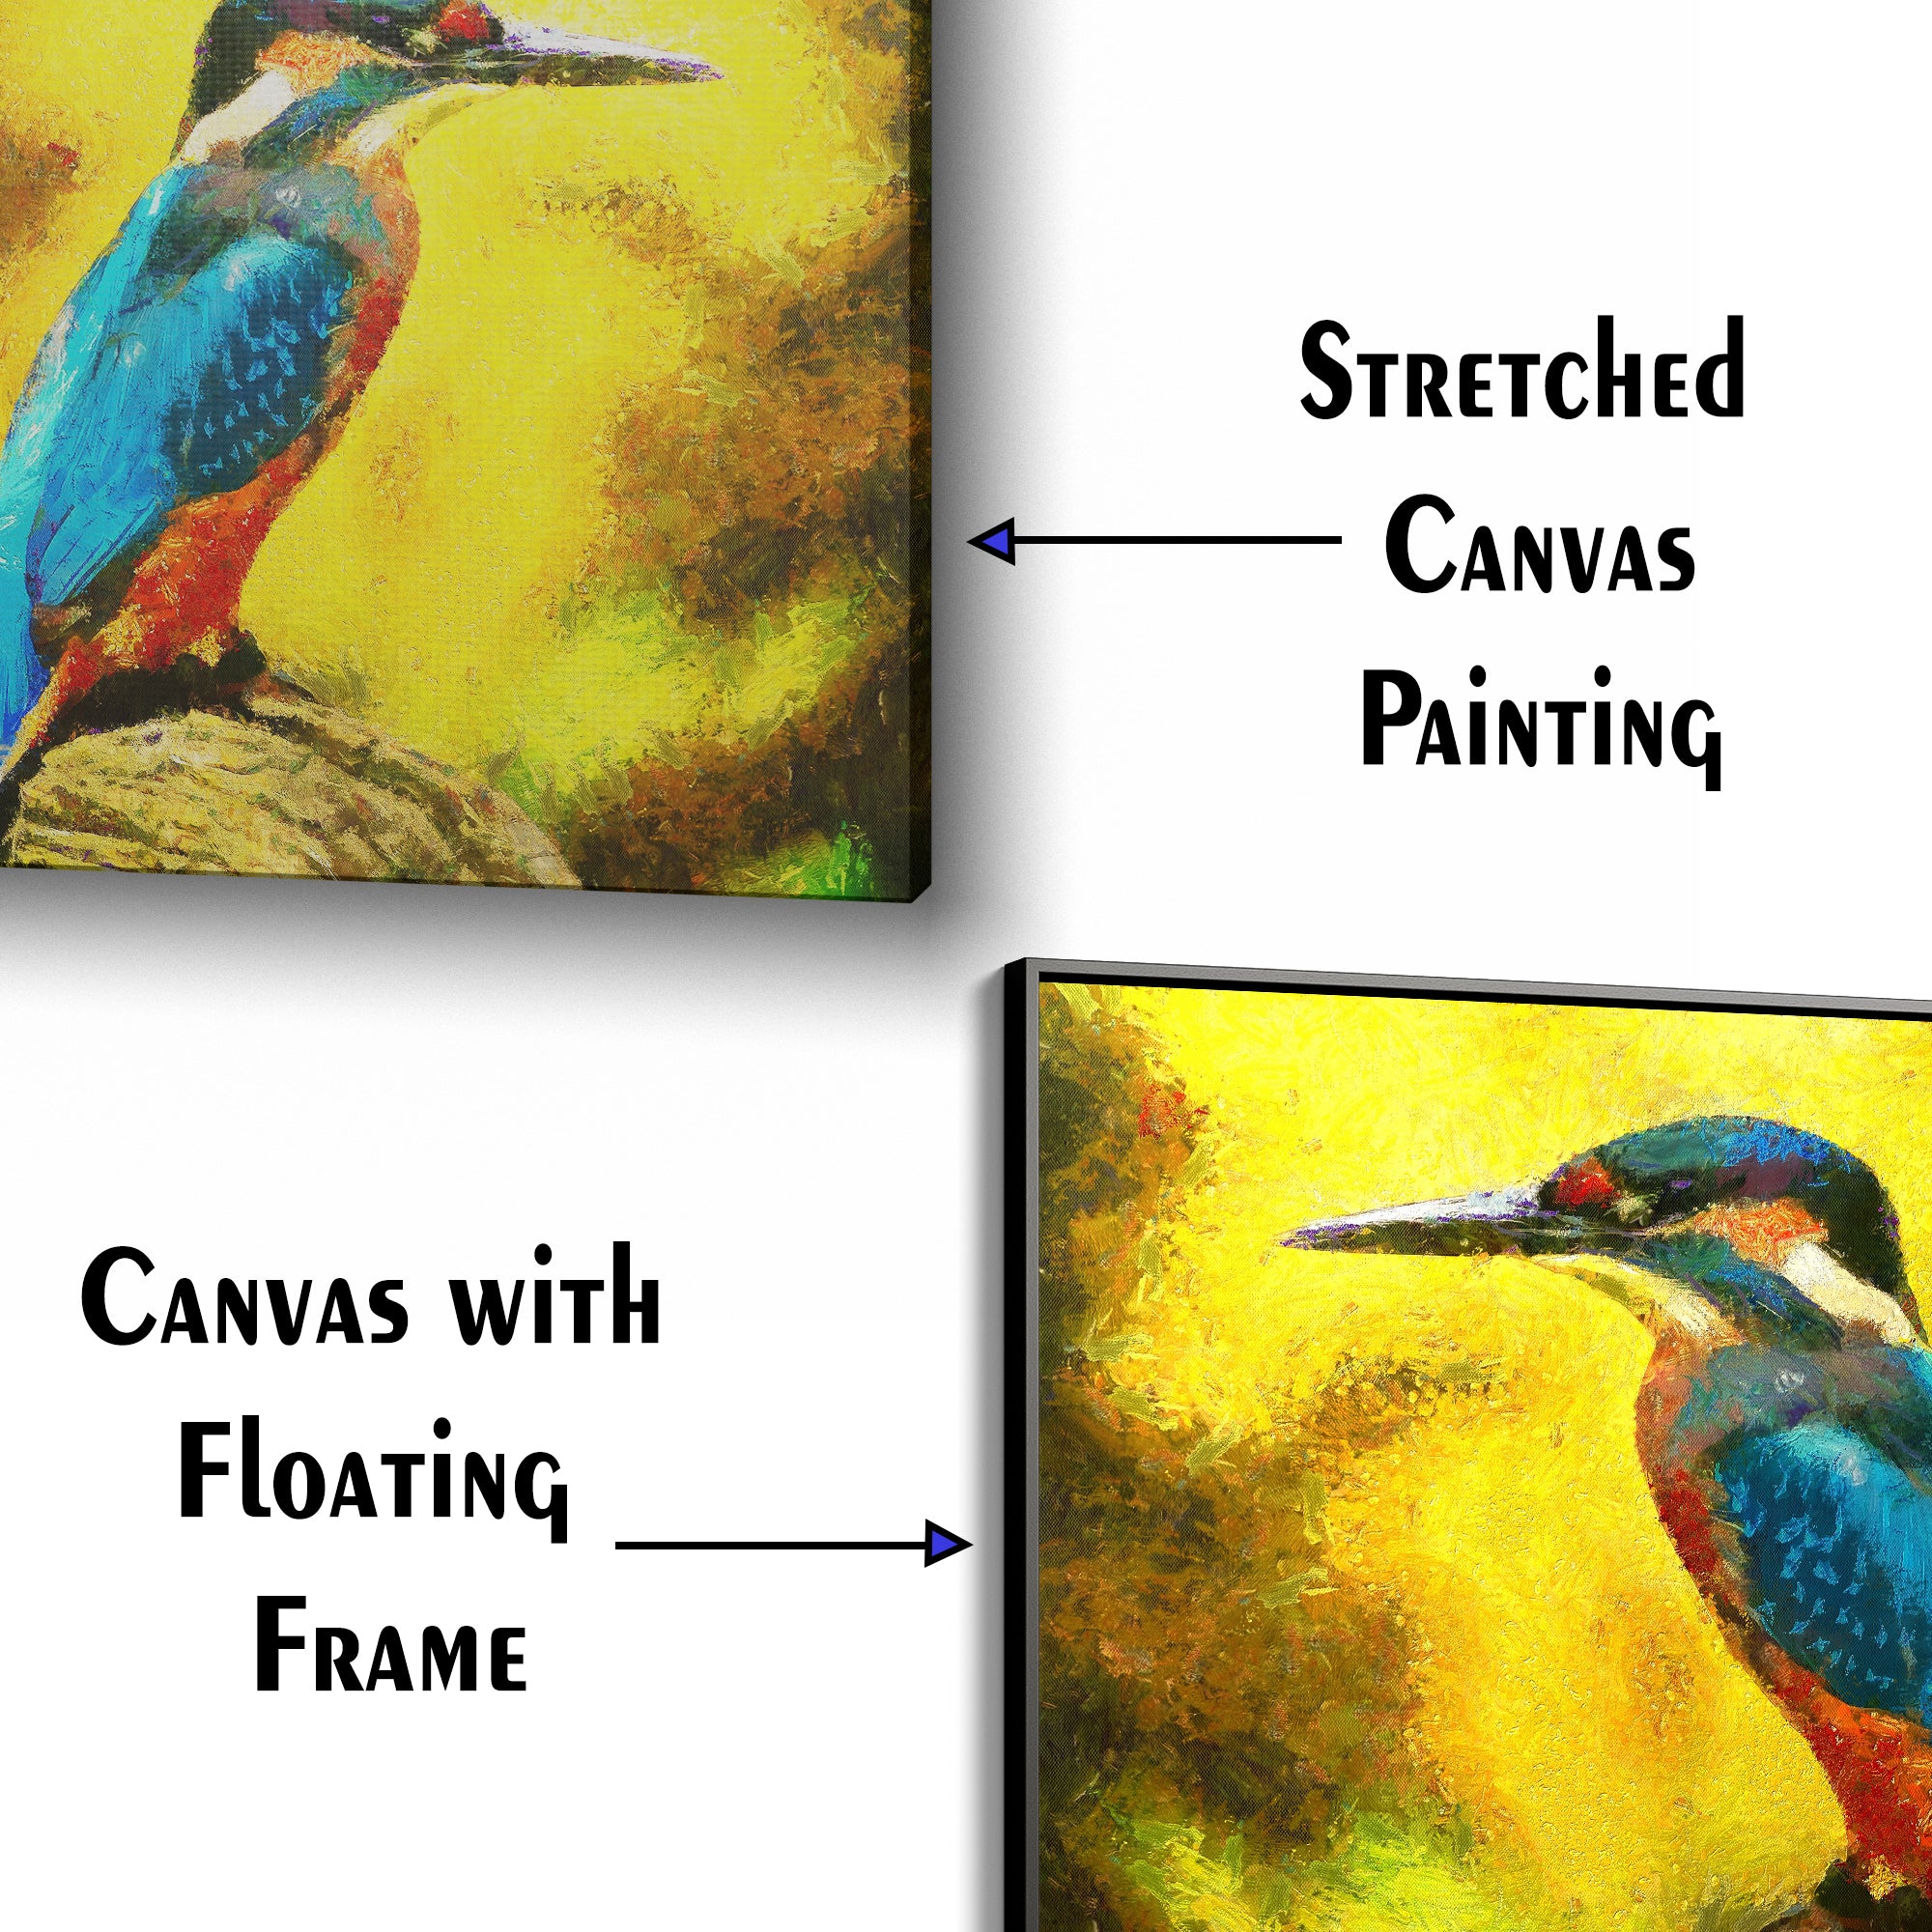 Kingfisher Bird Canvas Wall Painting